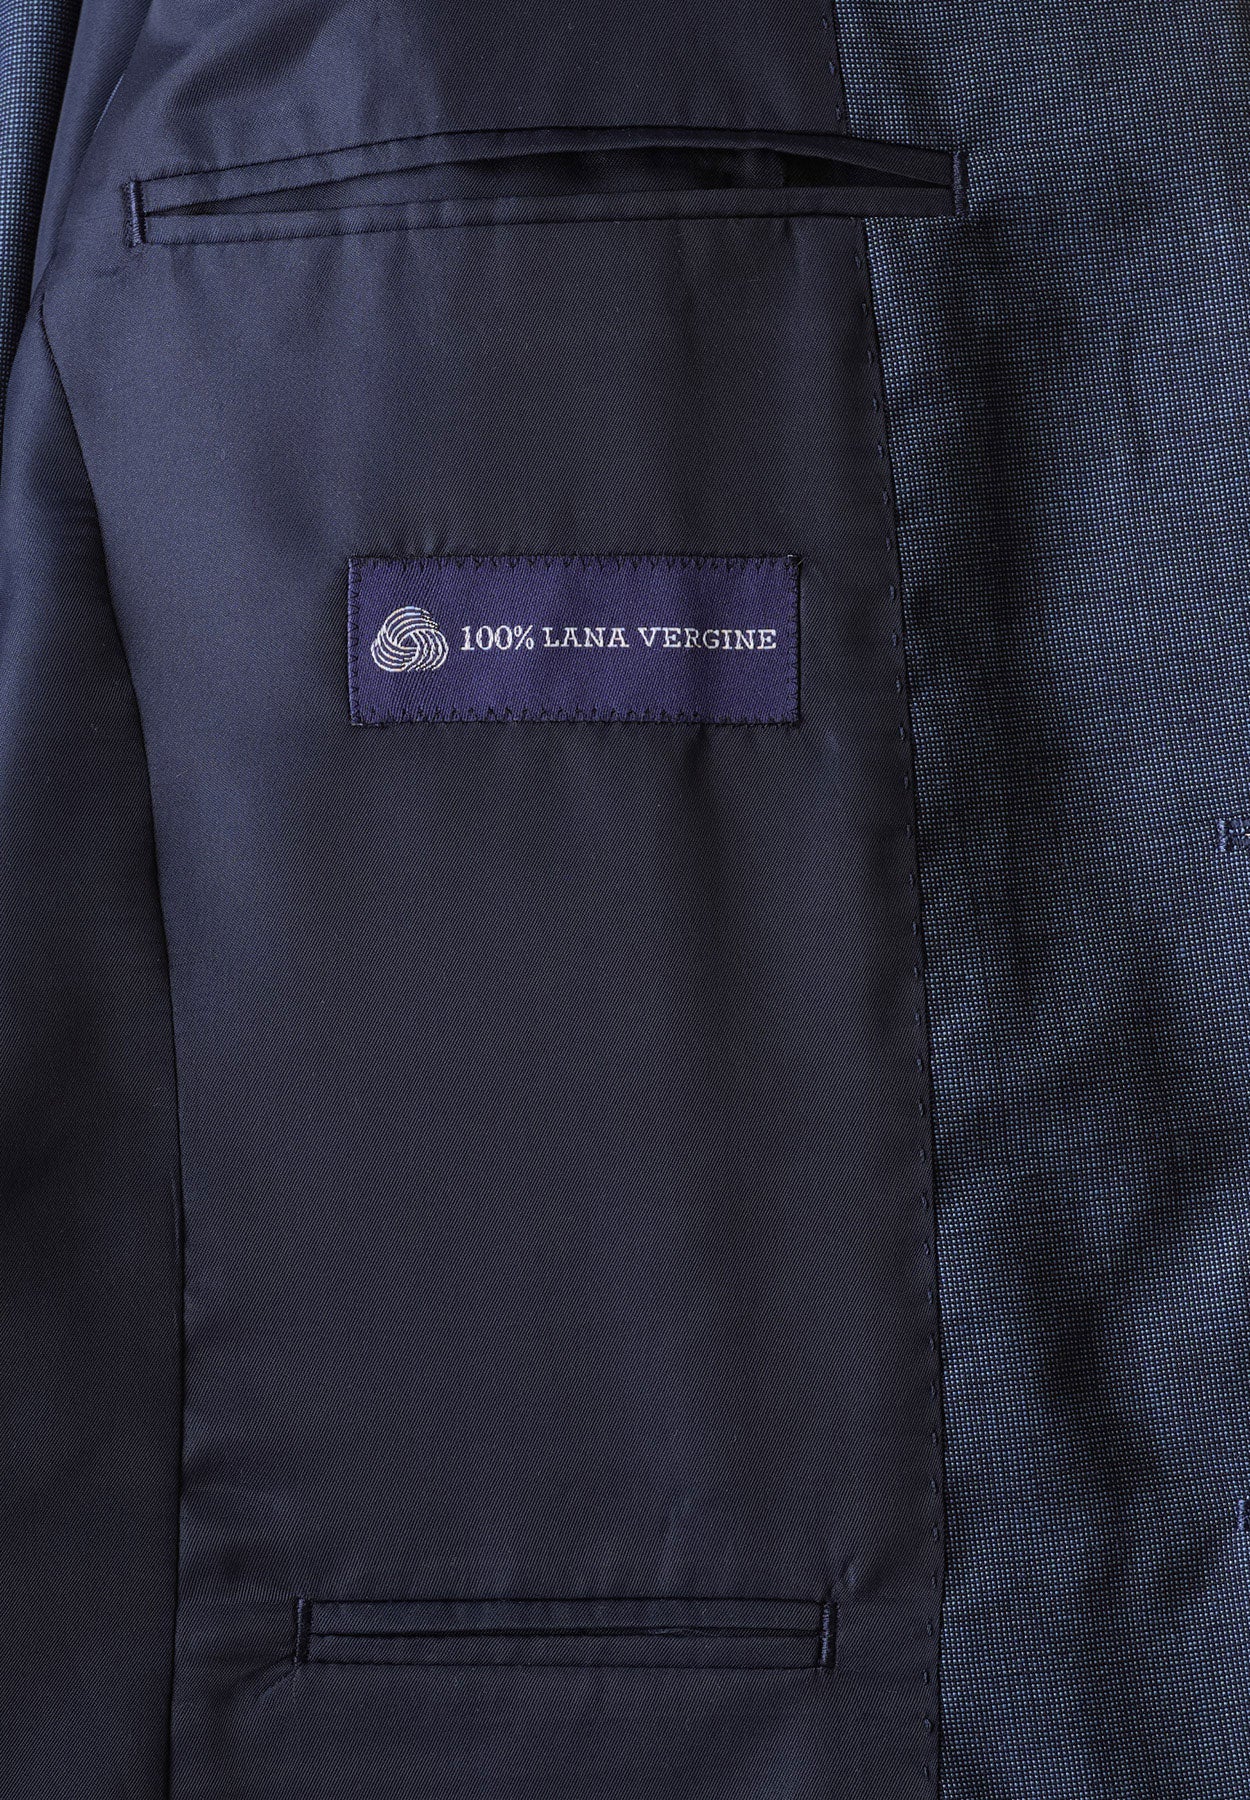 Blue filafil wool slim fit suit